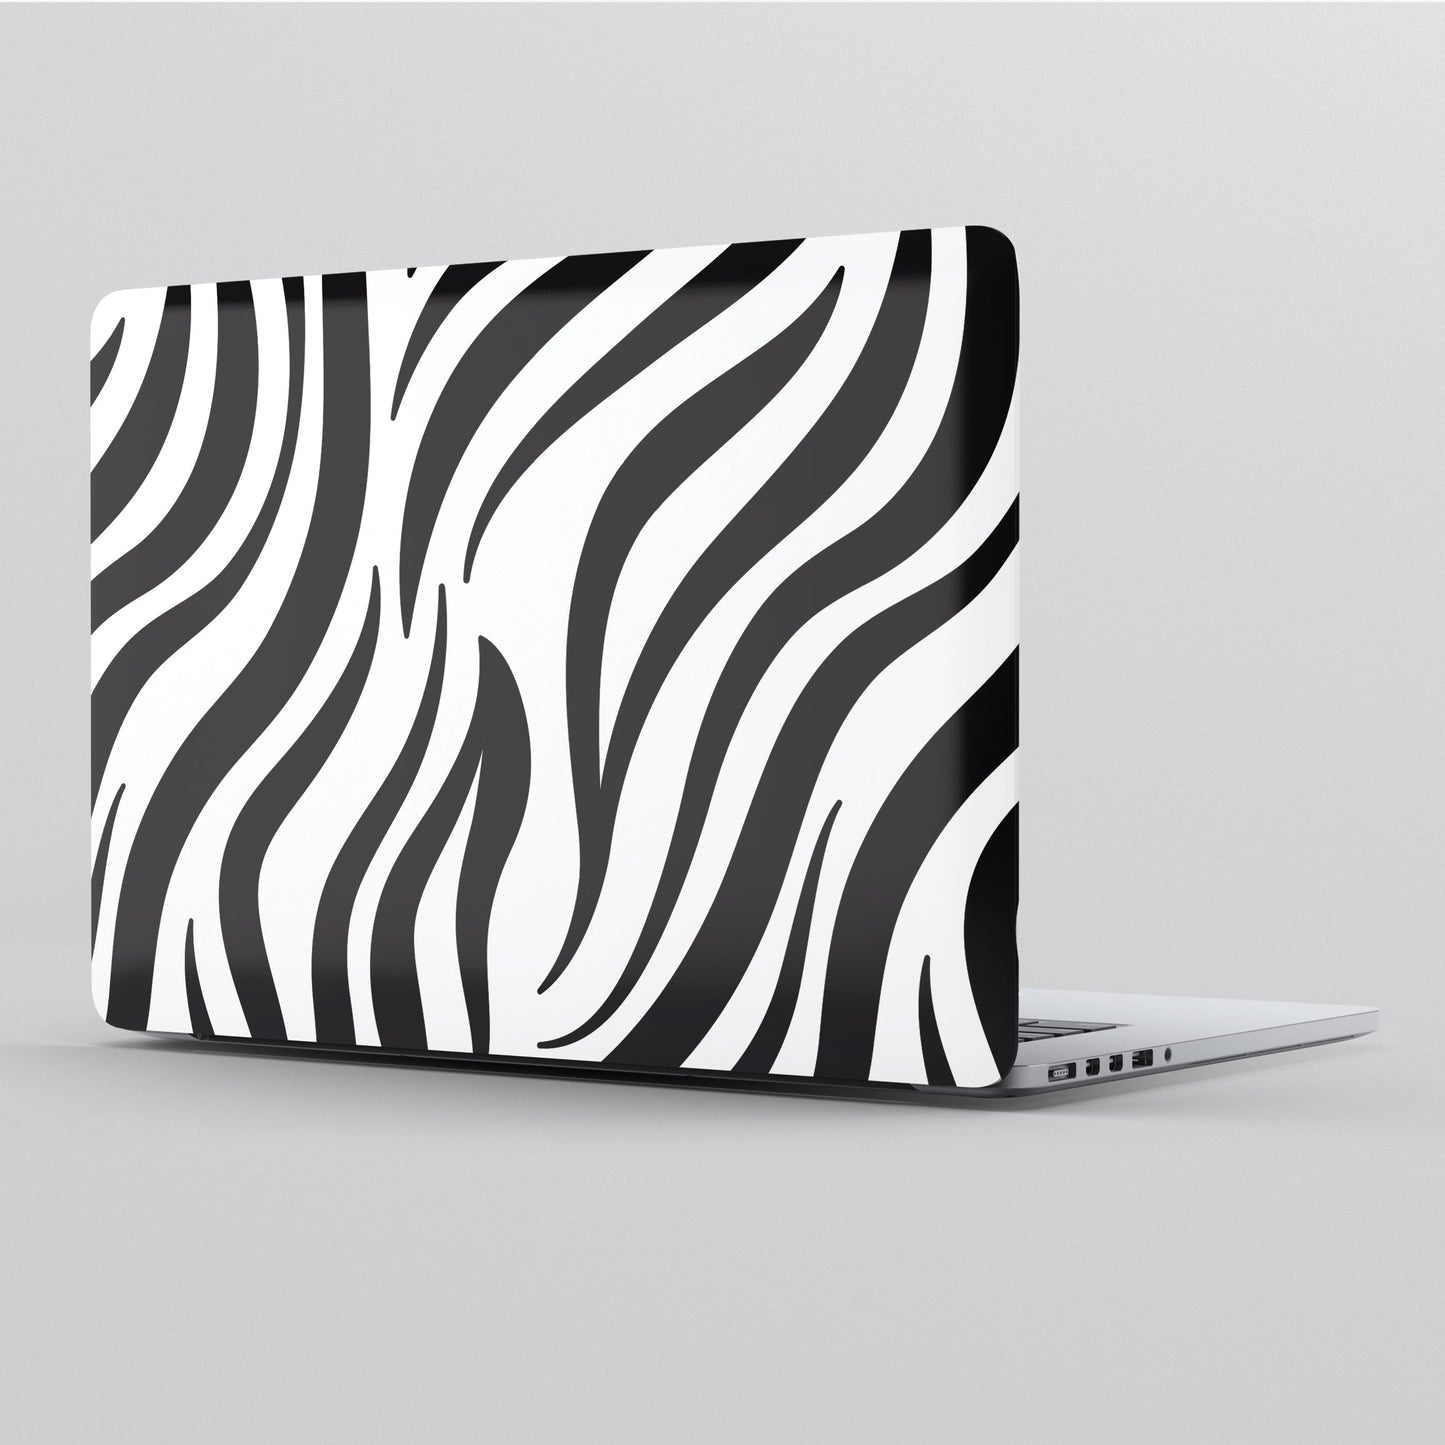 Wrapie Zebra Stripes Printed Art Laptop Skin